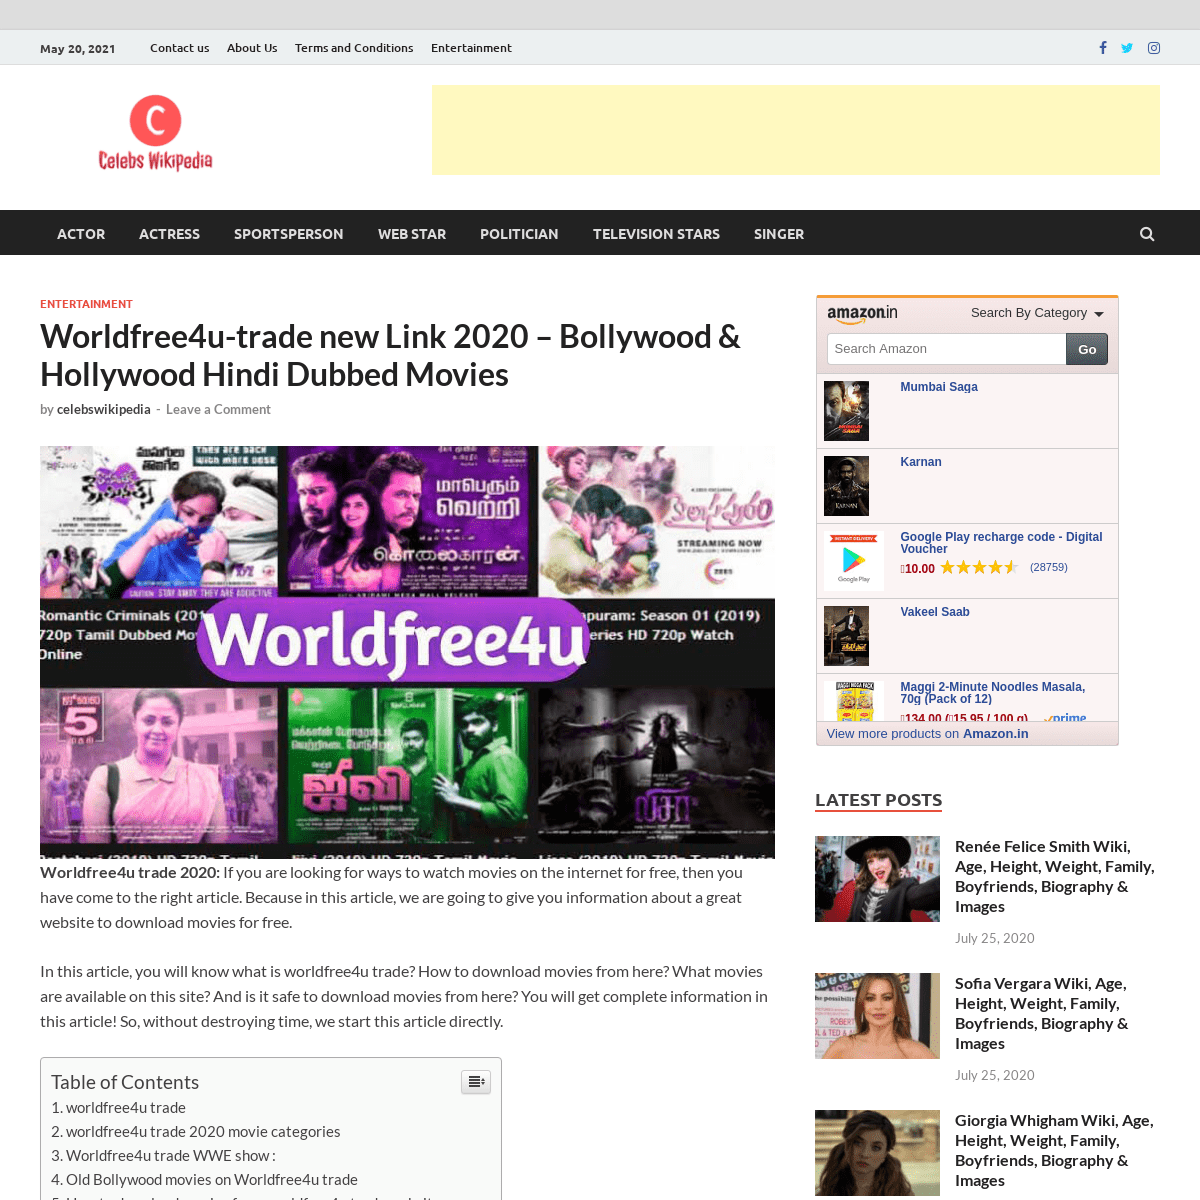 A complete backup of https://celebswikipedia.com/worldfree4u-trade-new-link-2020/